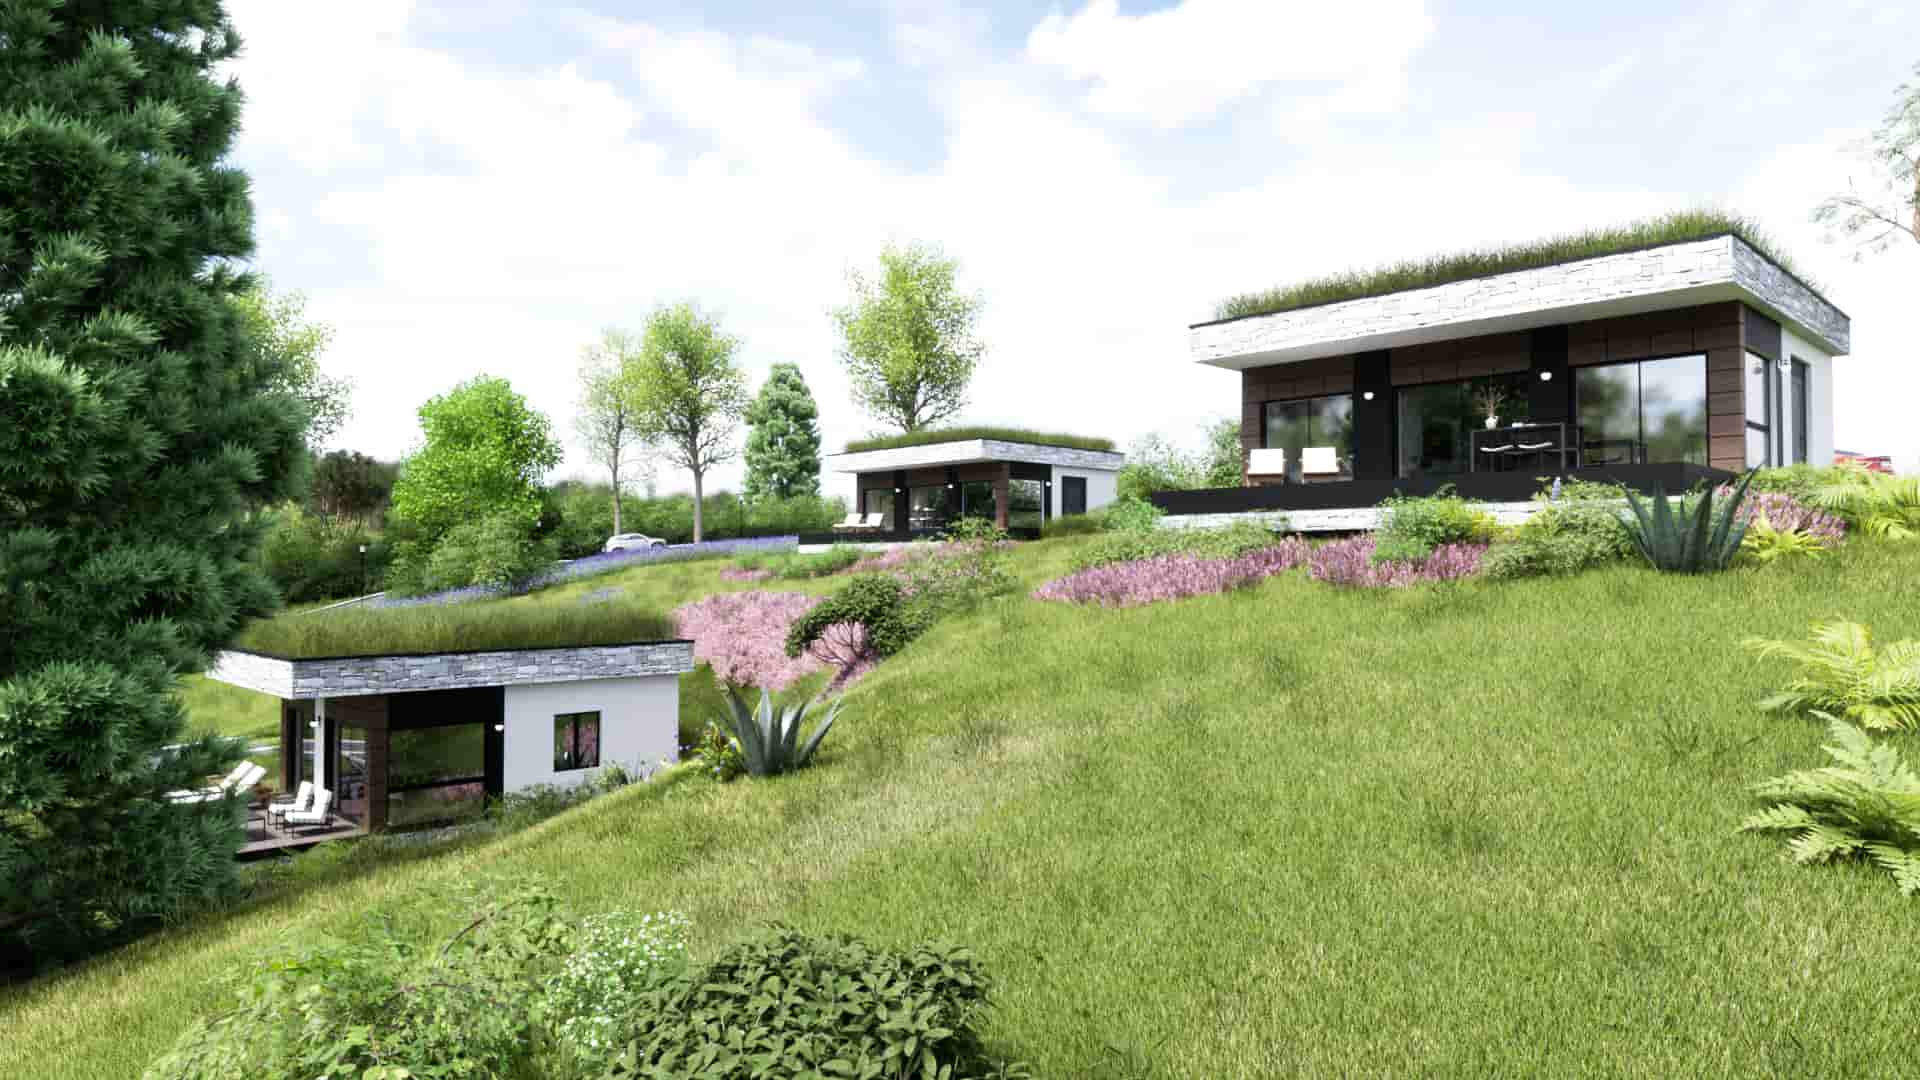 Eko naselje Šumadijski Kutak - Severni Kutak - Green roof koncept